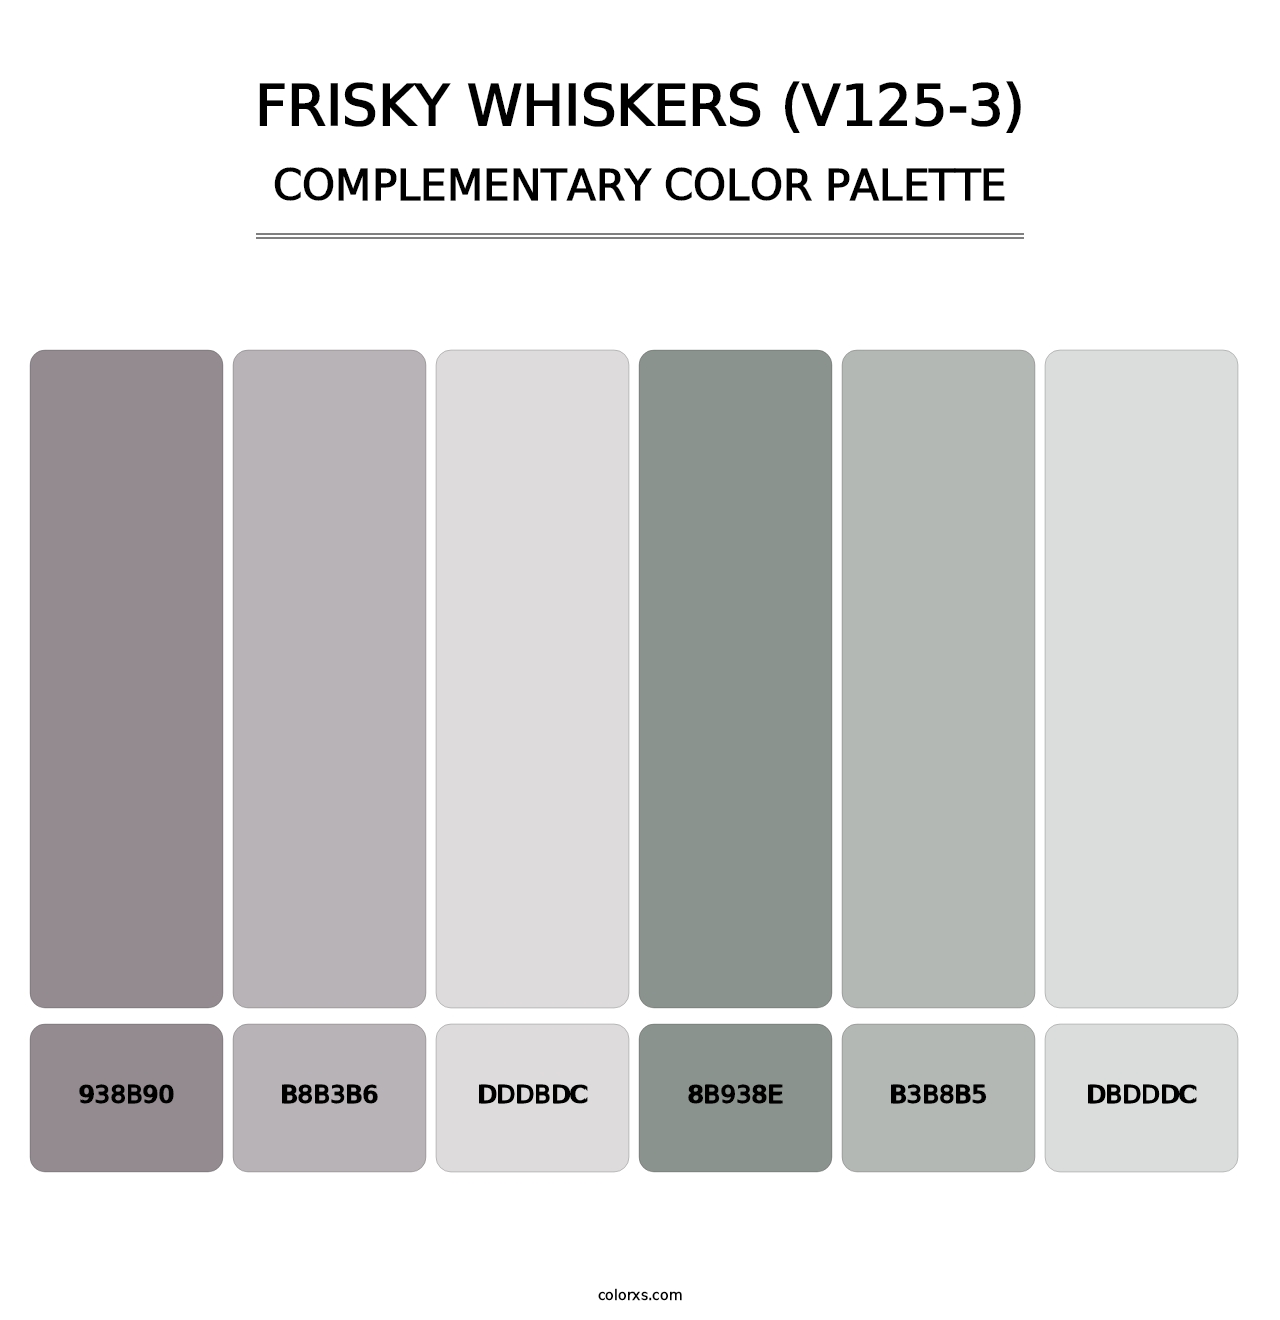 Frisky Whiskers (V125-3) - Complementary Color Palette